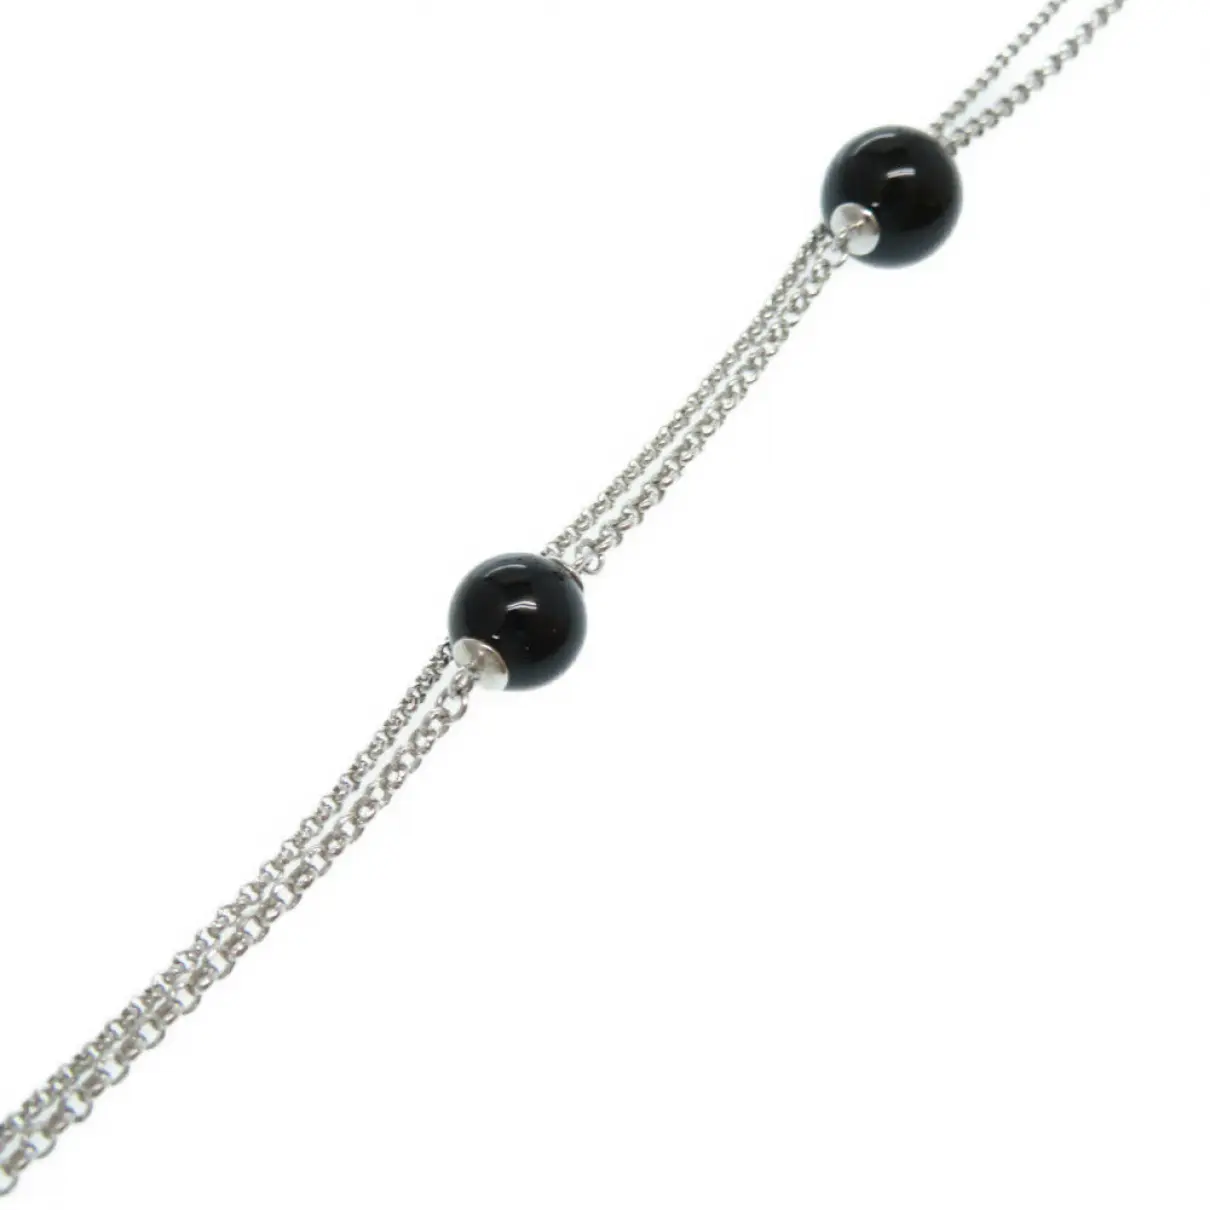 Buy Georg Jensen Silver necklace online